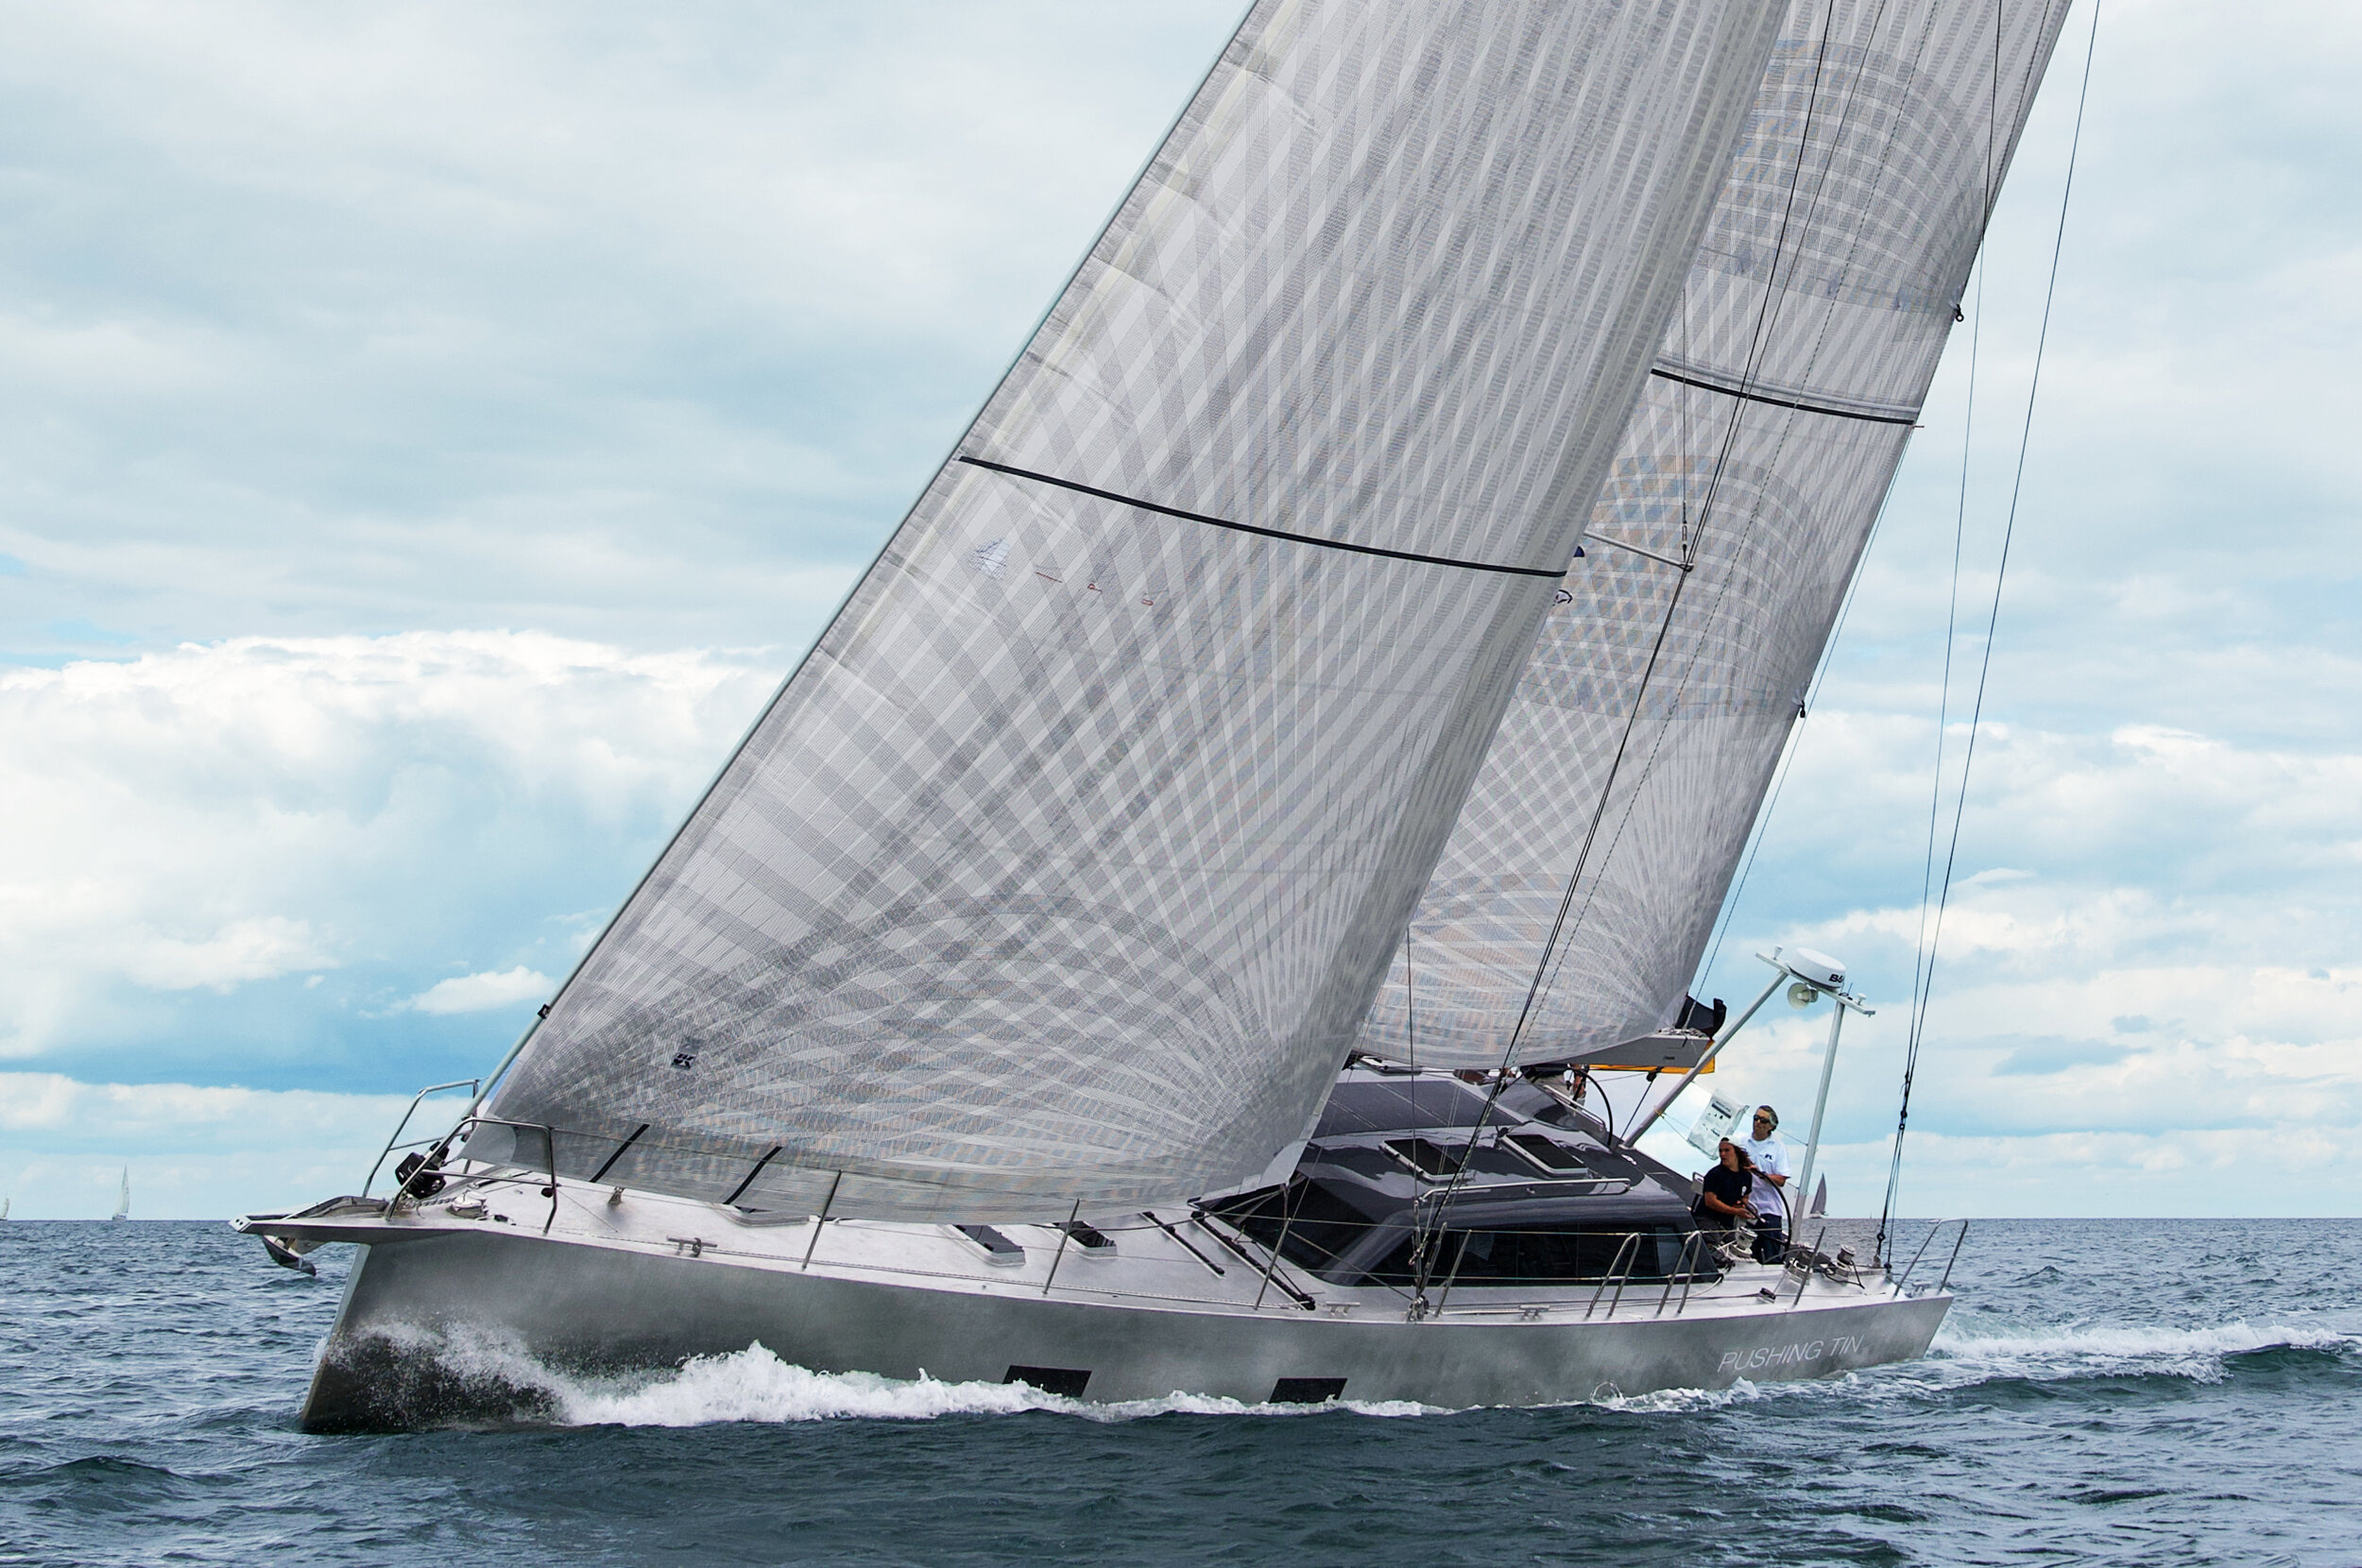 X-Drive Carbon cruising sails on a brand new 53-foot aluminum performance cruiser.